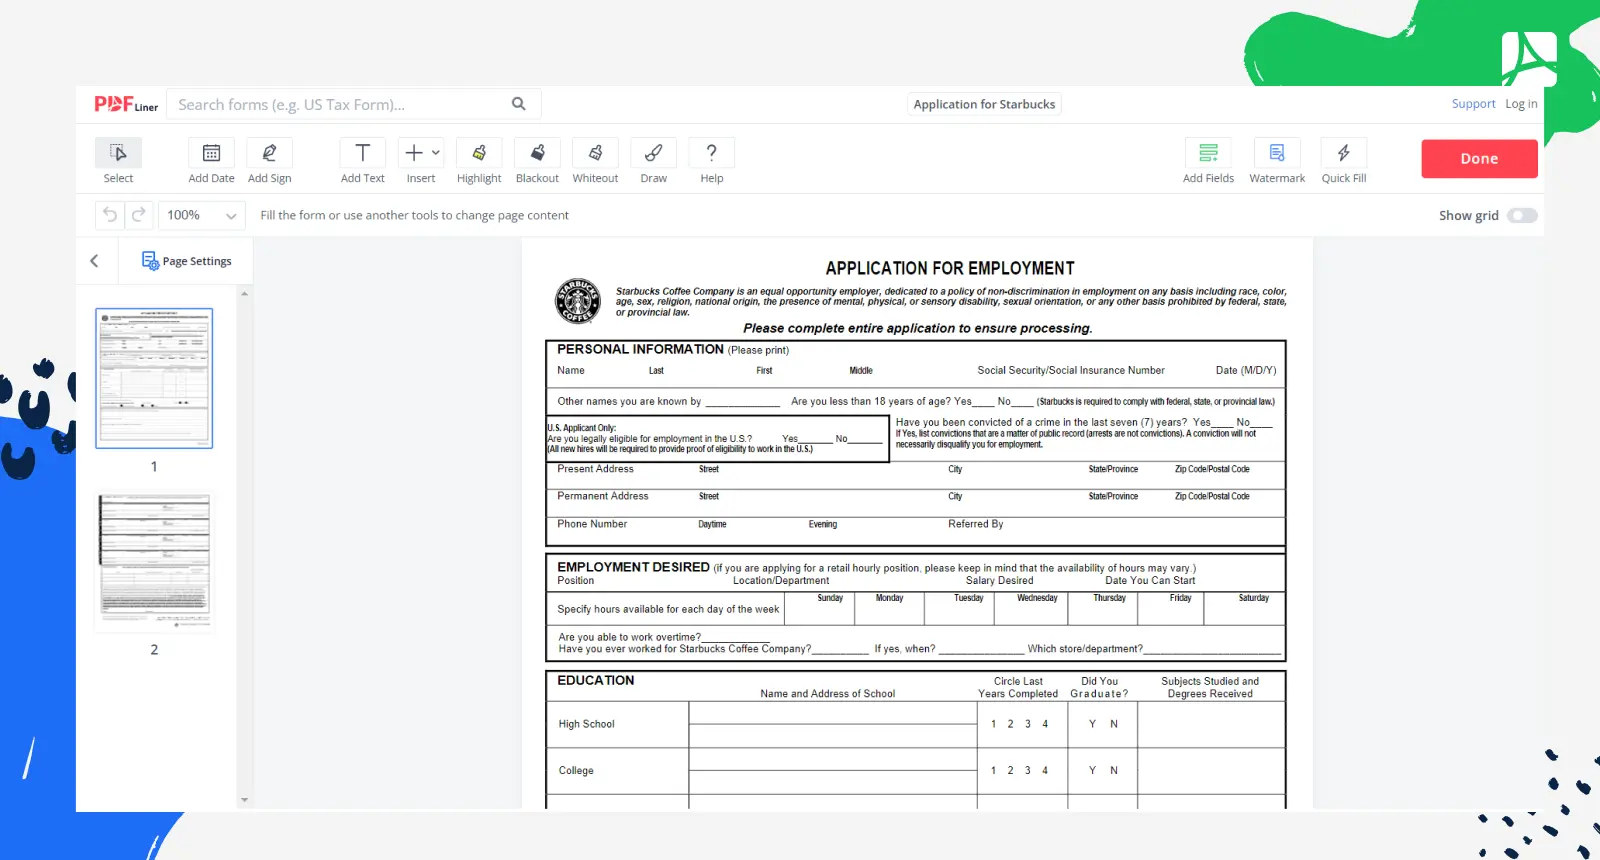 Application for Starbucks Form Screenshot